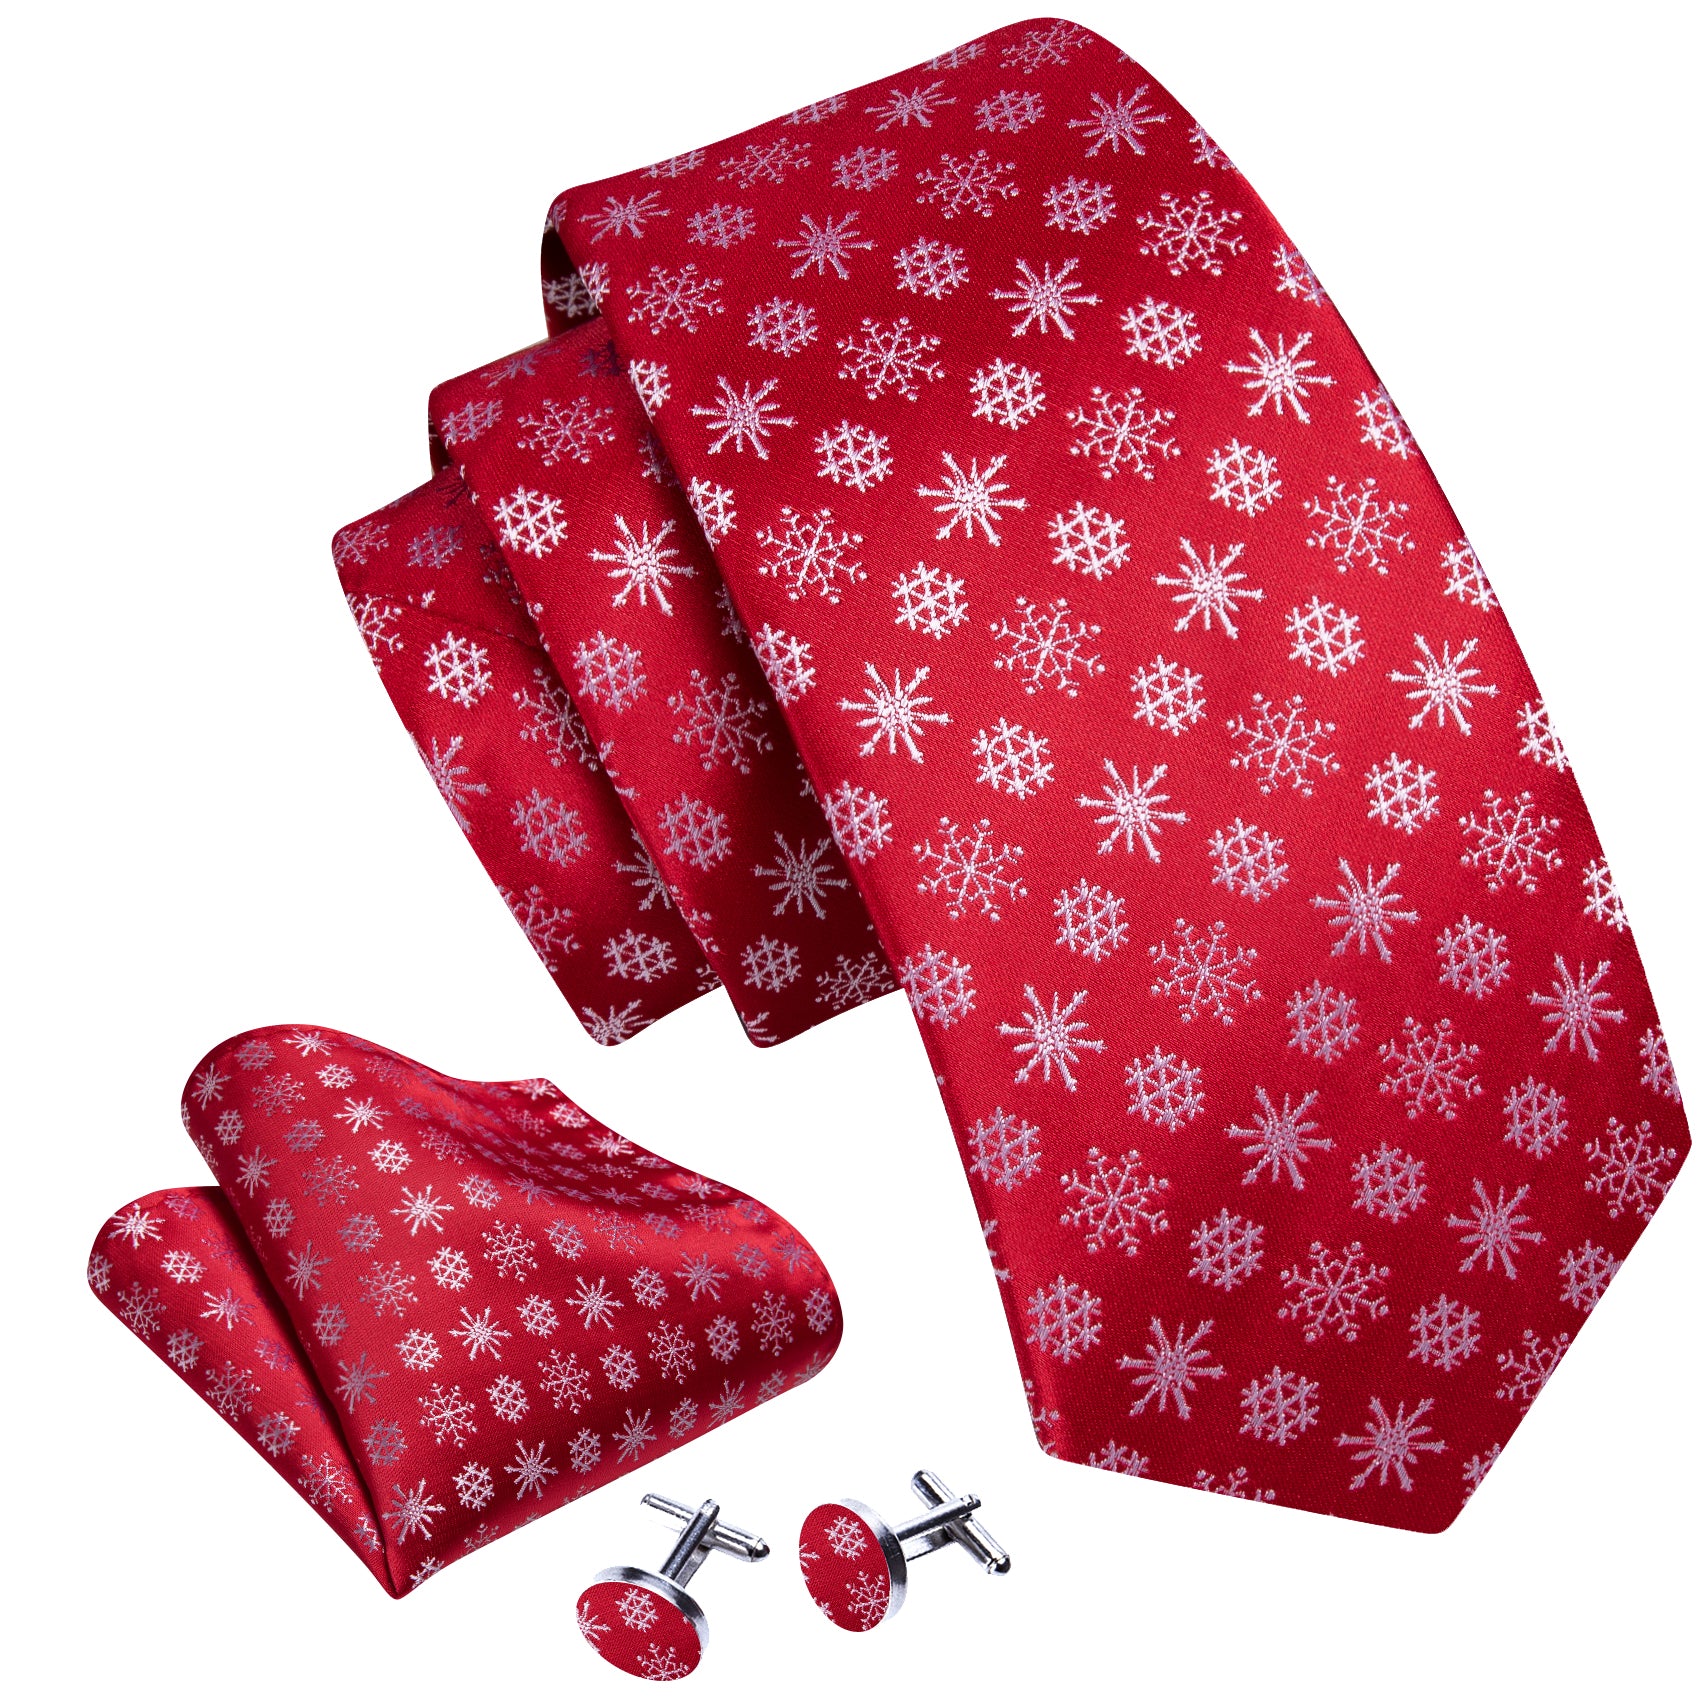 Barry.wang Christmas Tie Red White Snowflake Men's Tie Pocket Square Cufflinks Set